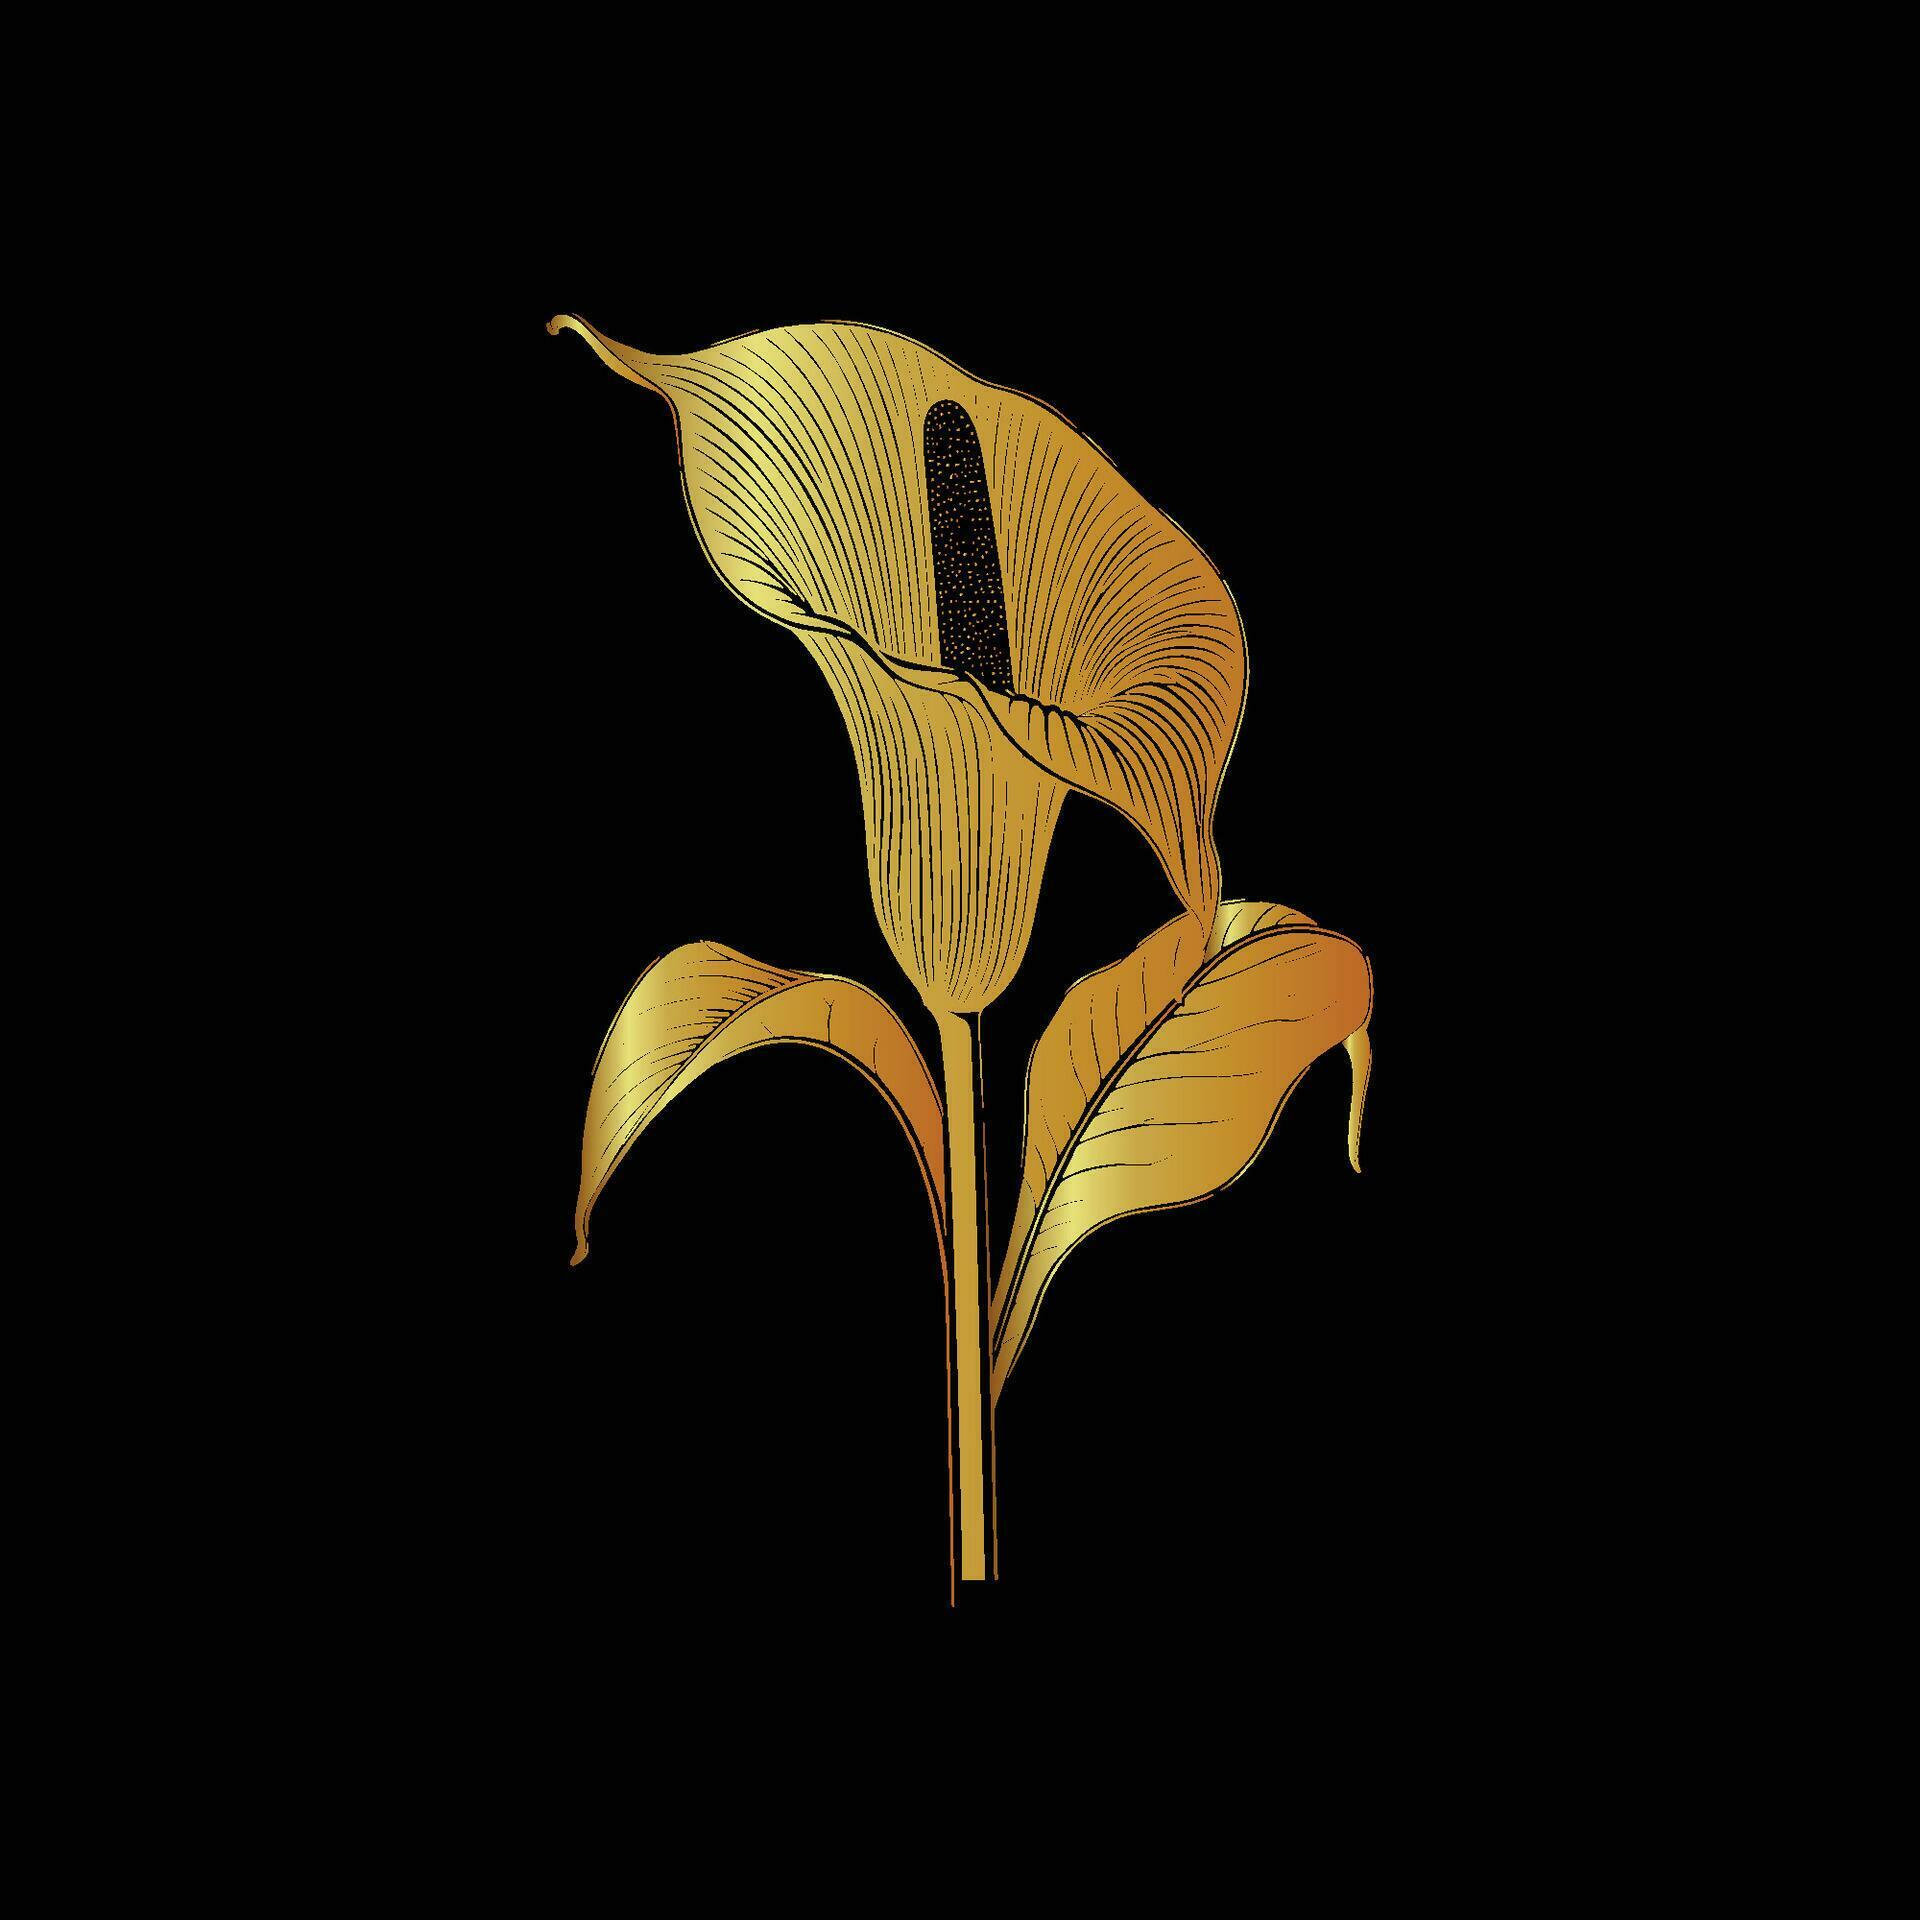 Gold Vector Illustration of a Calla Gold Lily 27189693 Vector Art at ...